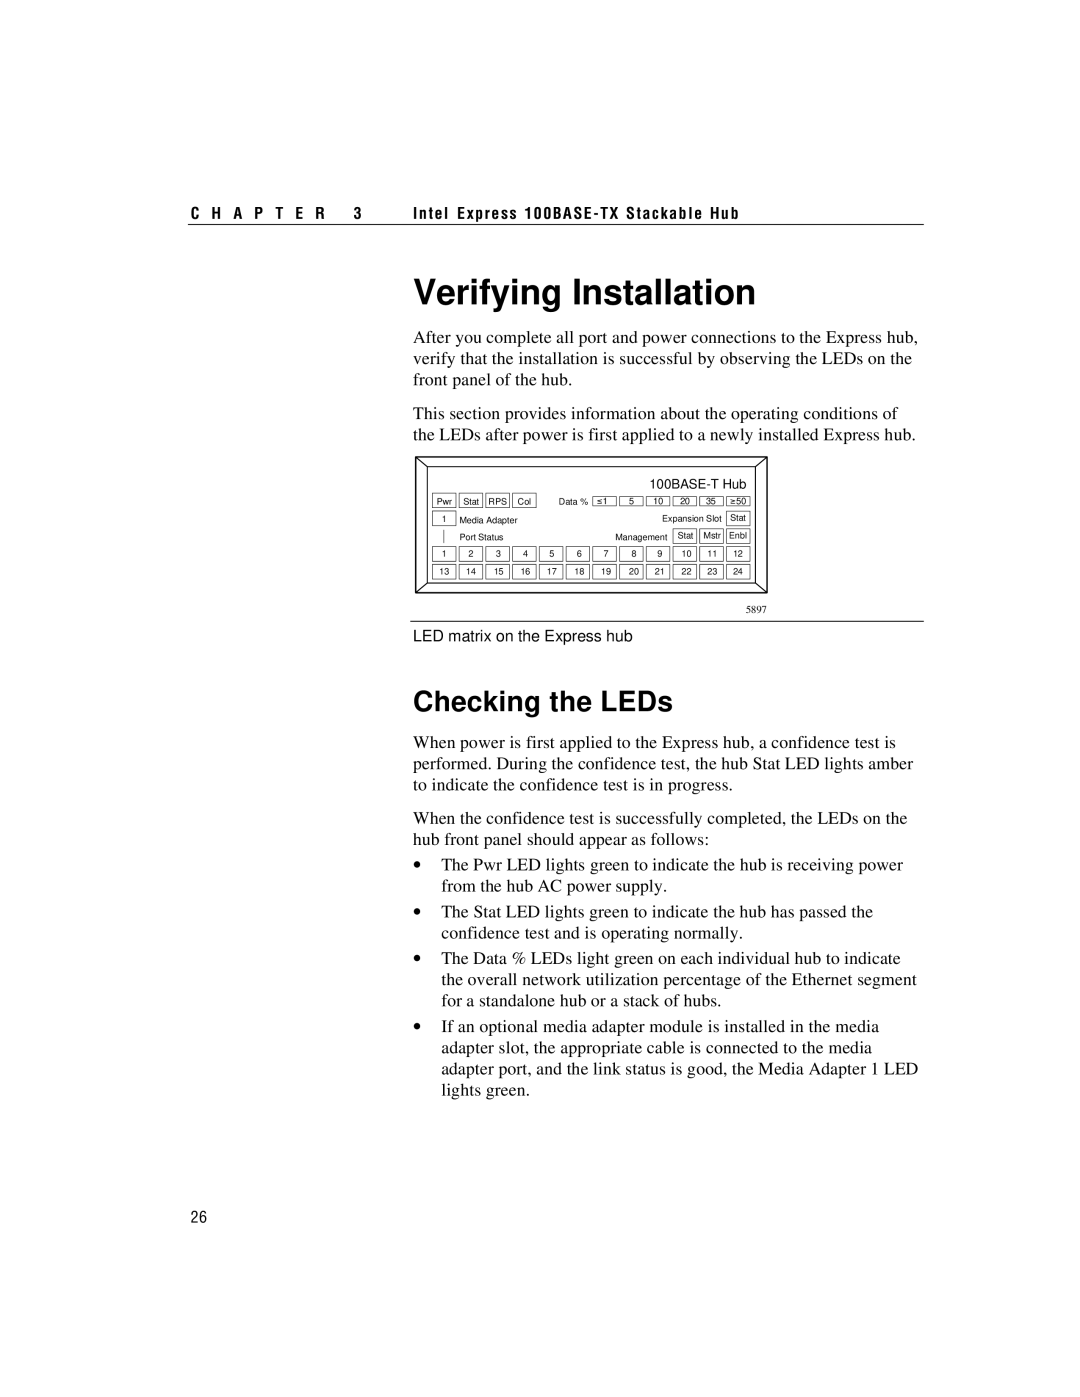 Intel 100BASE-TX manual Verifying Installation, Checking the LEDs 